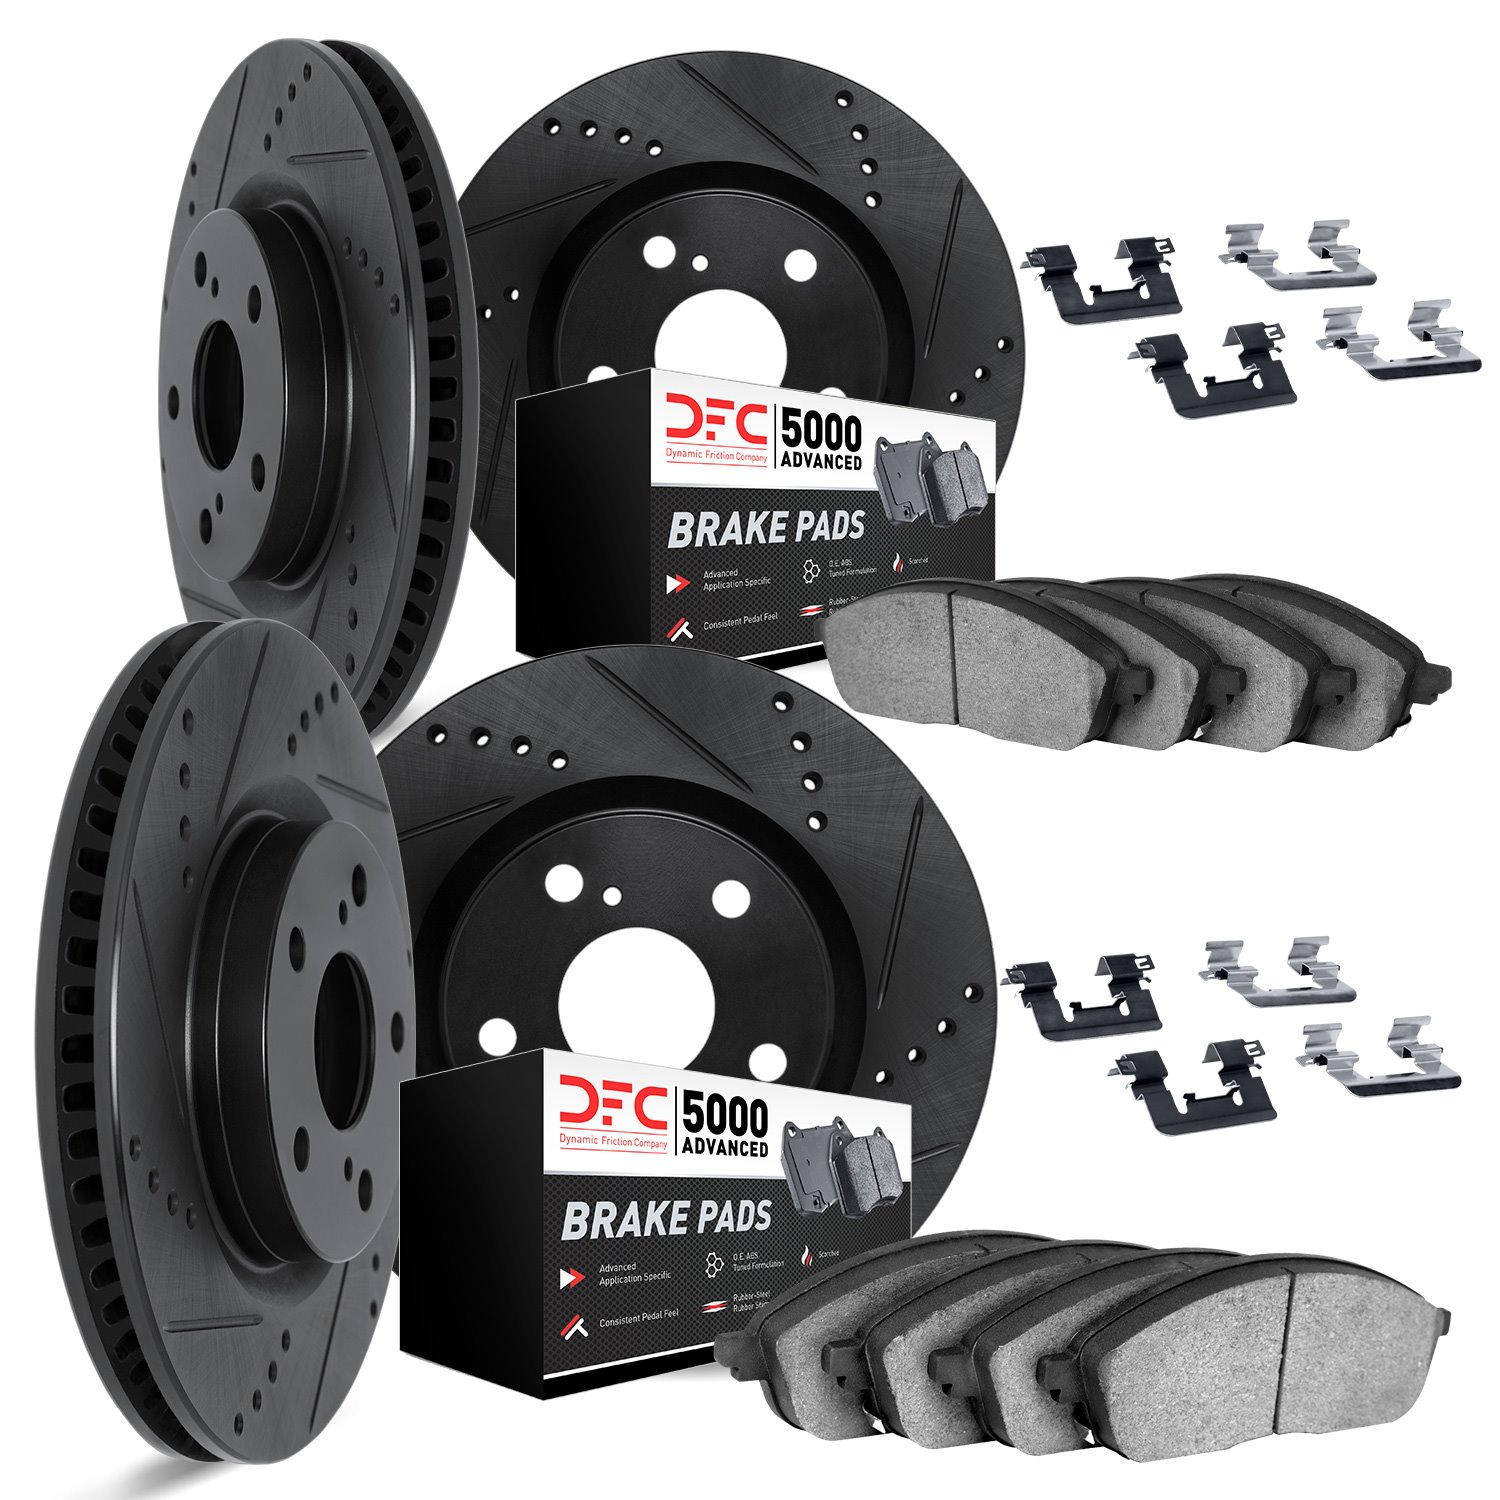 8514-03084 Drilled/Slotted Brake Rotors w/5000 Advanced Brake Pads Kit & Hardware [Black], 2018-2020 Kia/Hyundai/Genesis, Positi